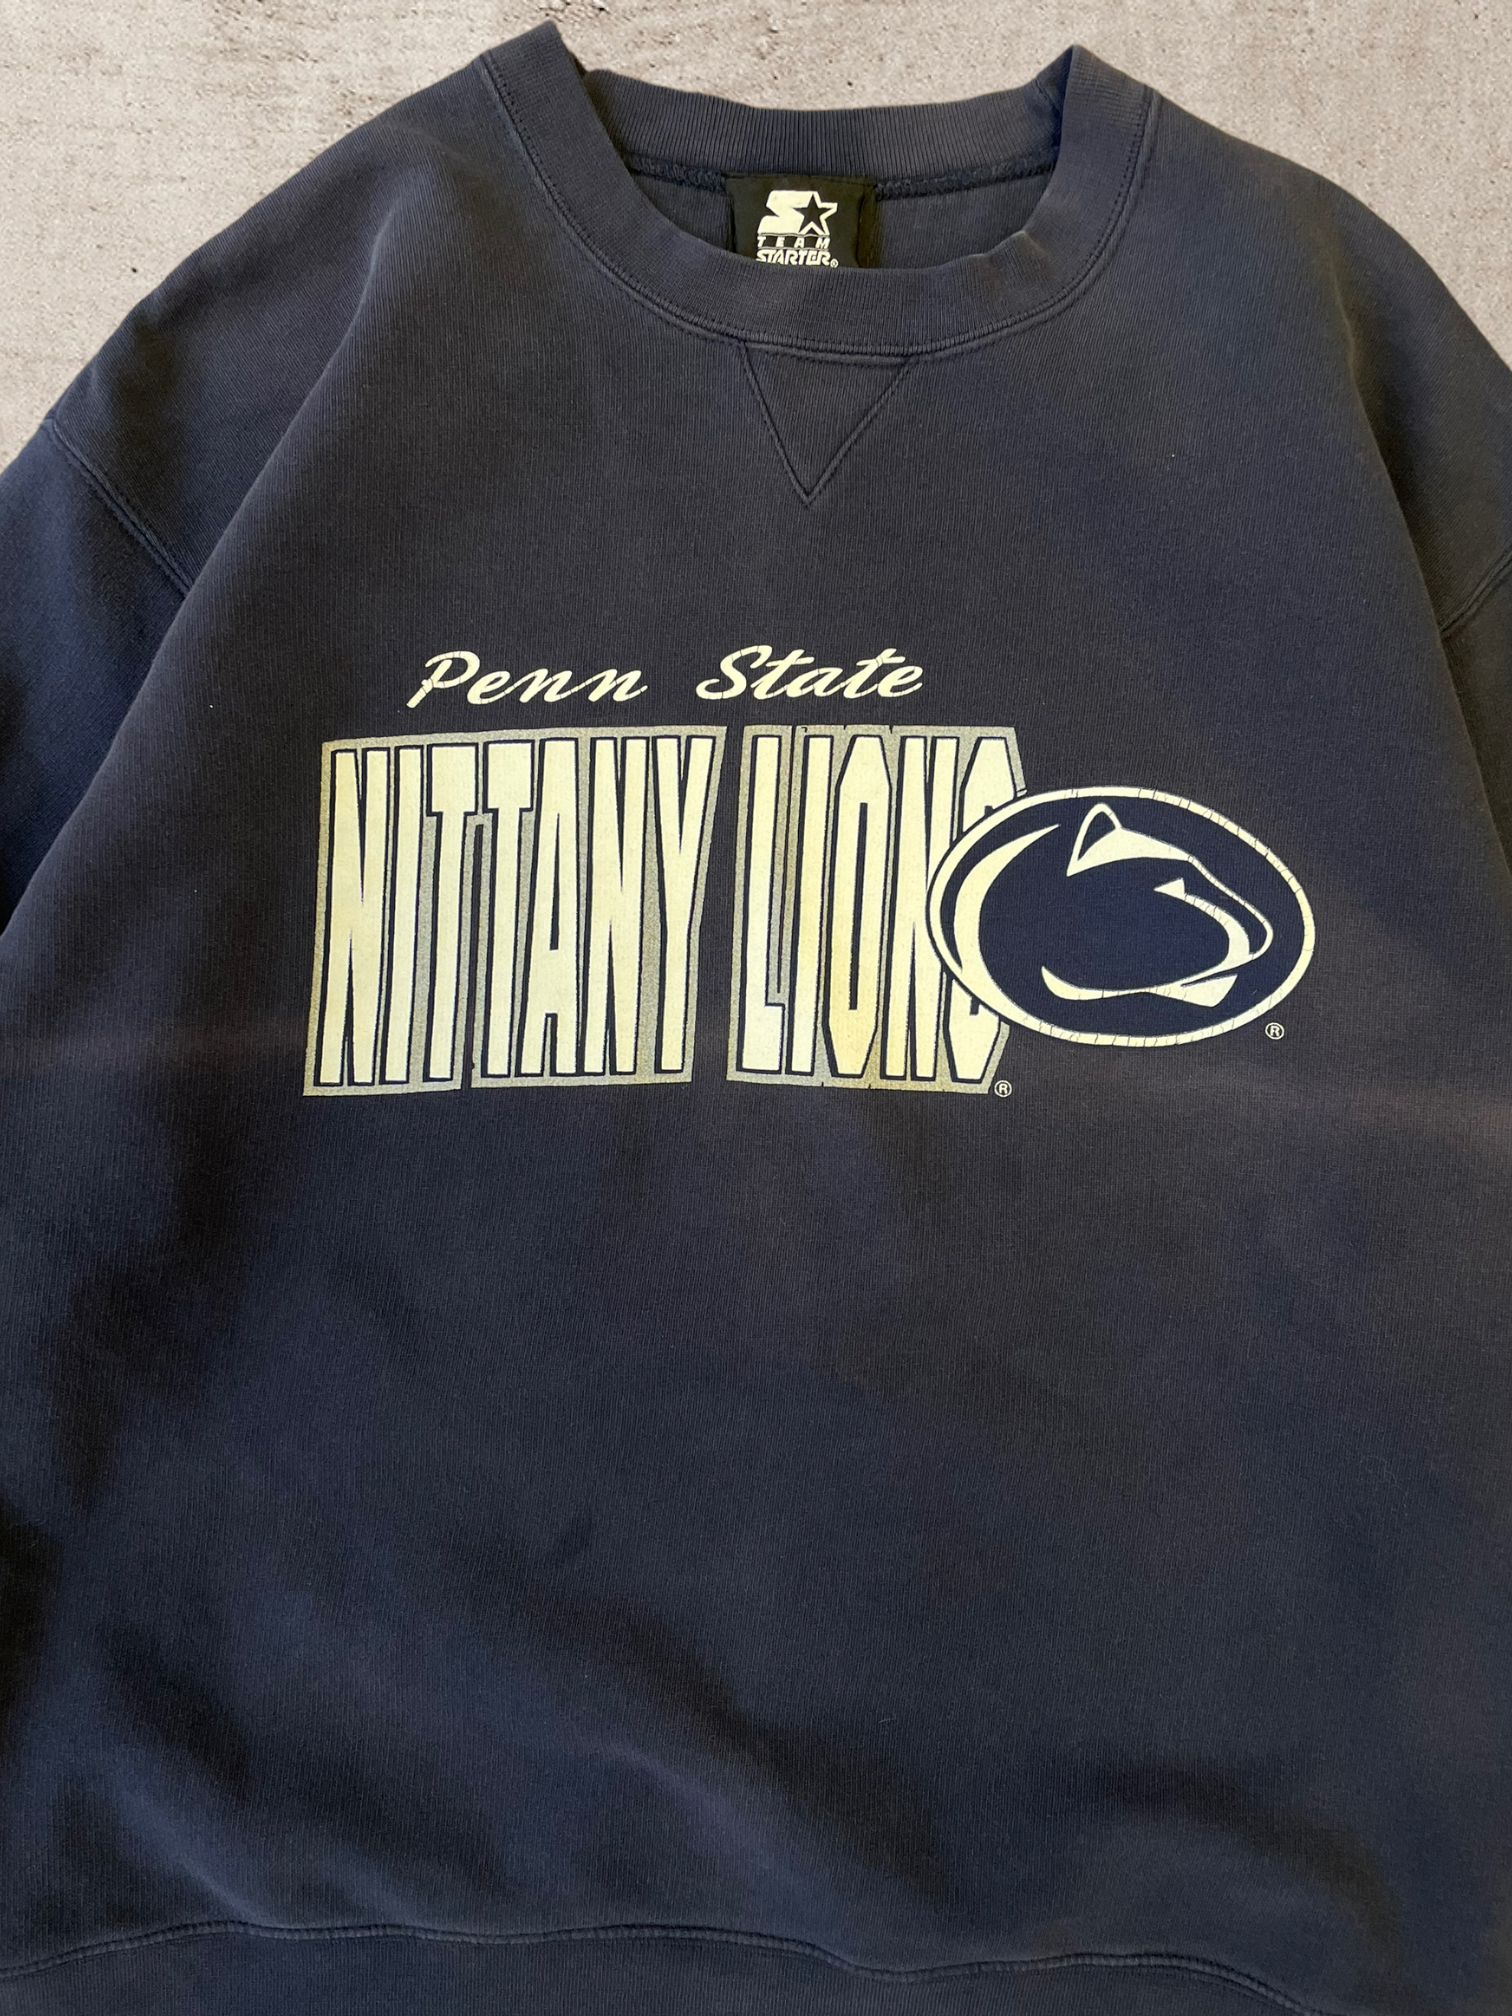 Vintage Penn State University Starter Crewneck - XL